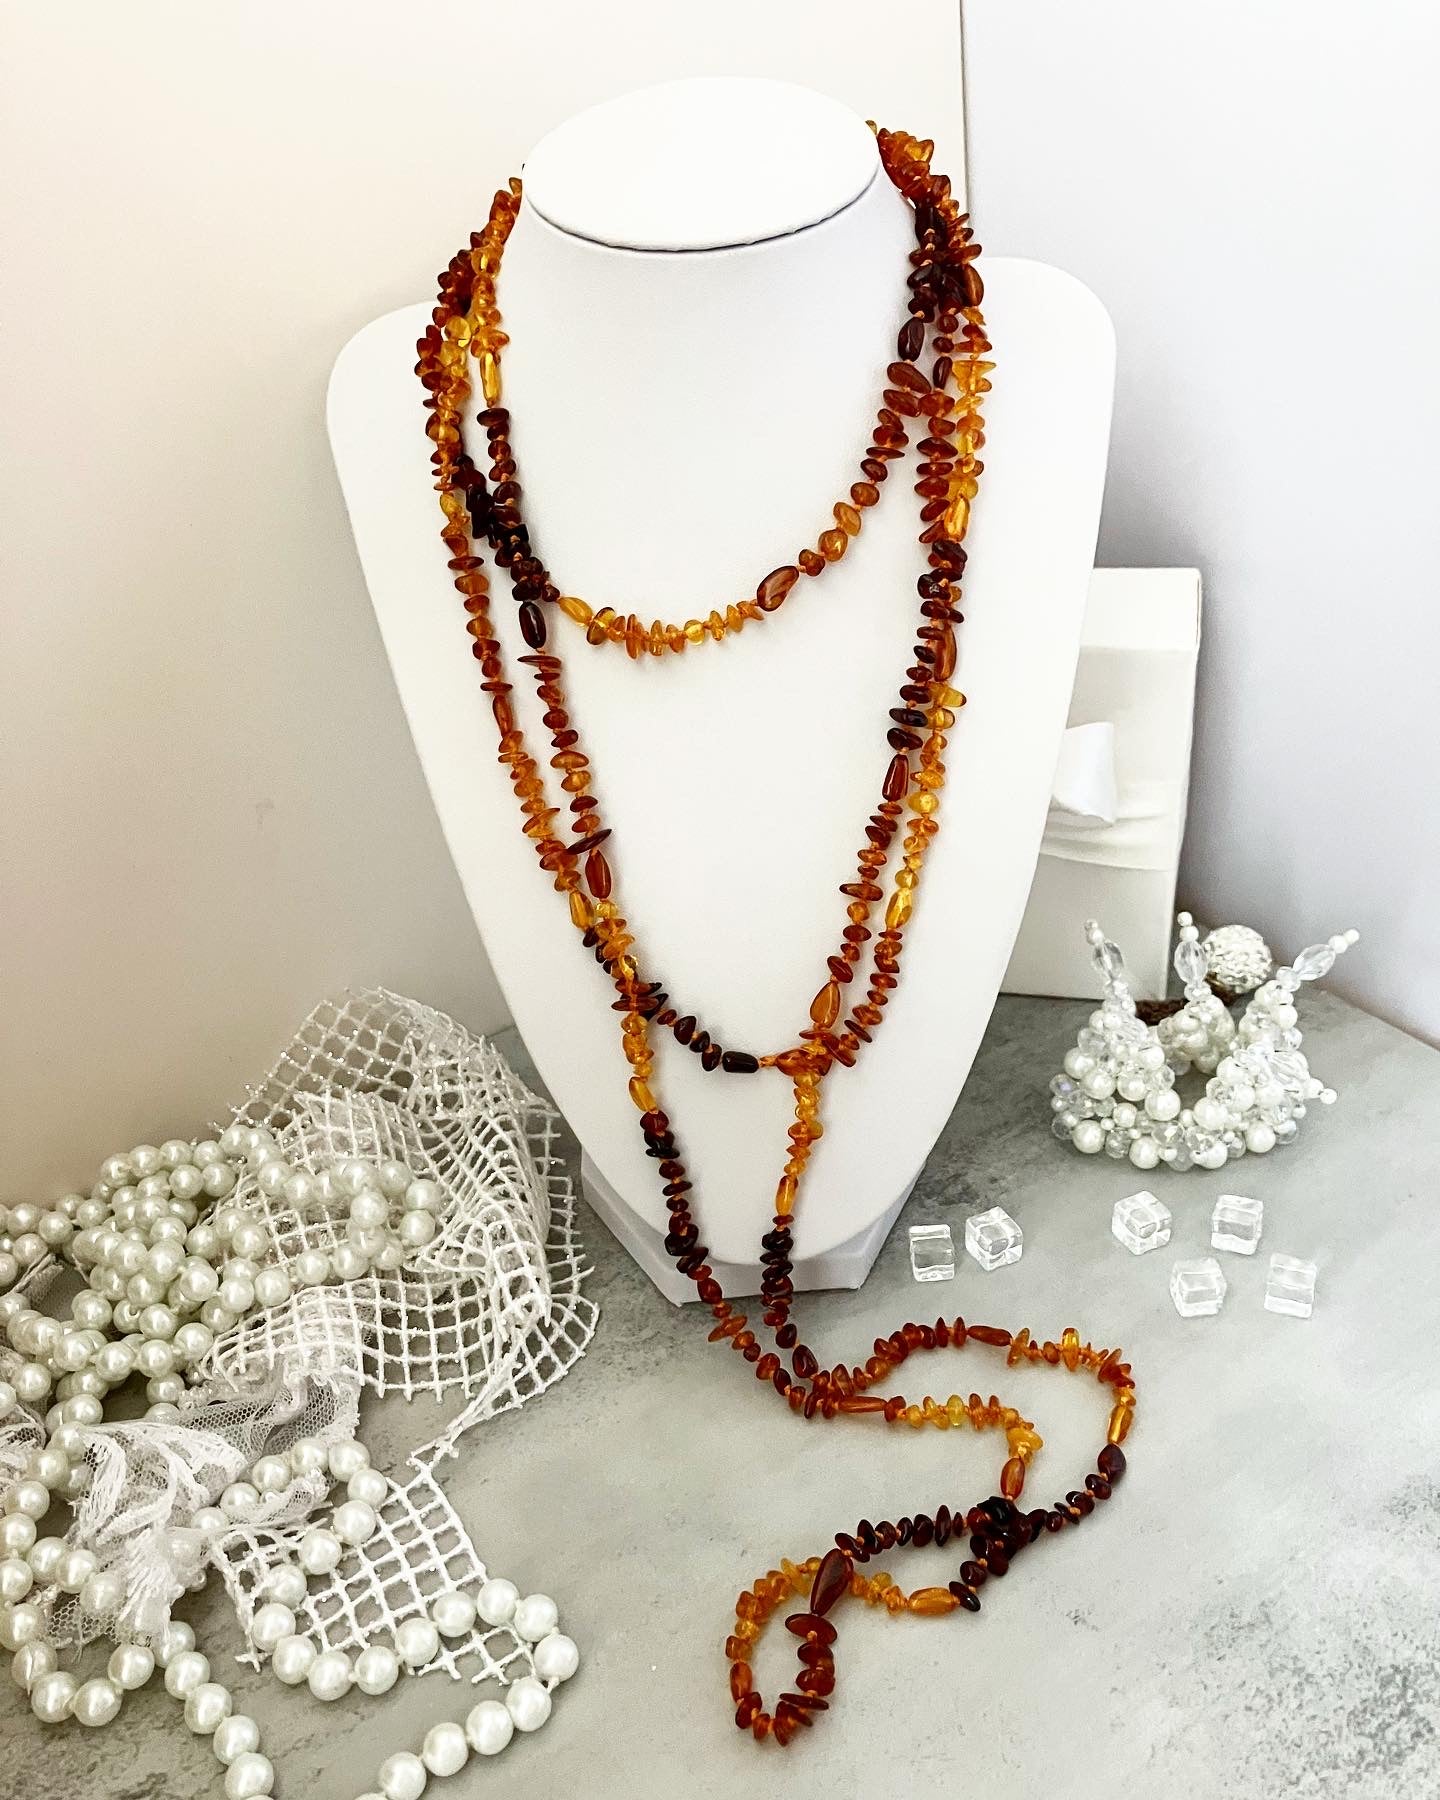 Long beads made of natural amber